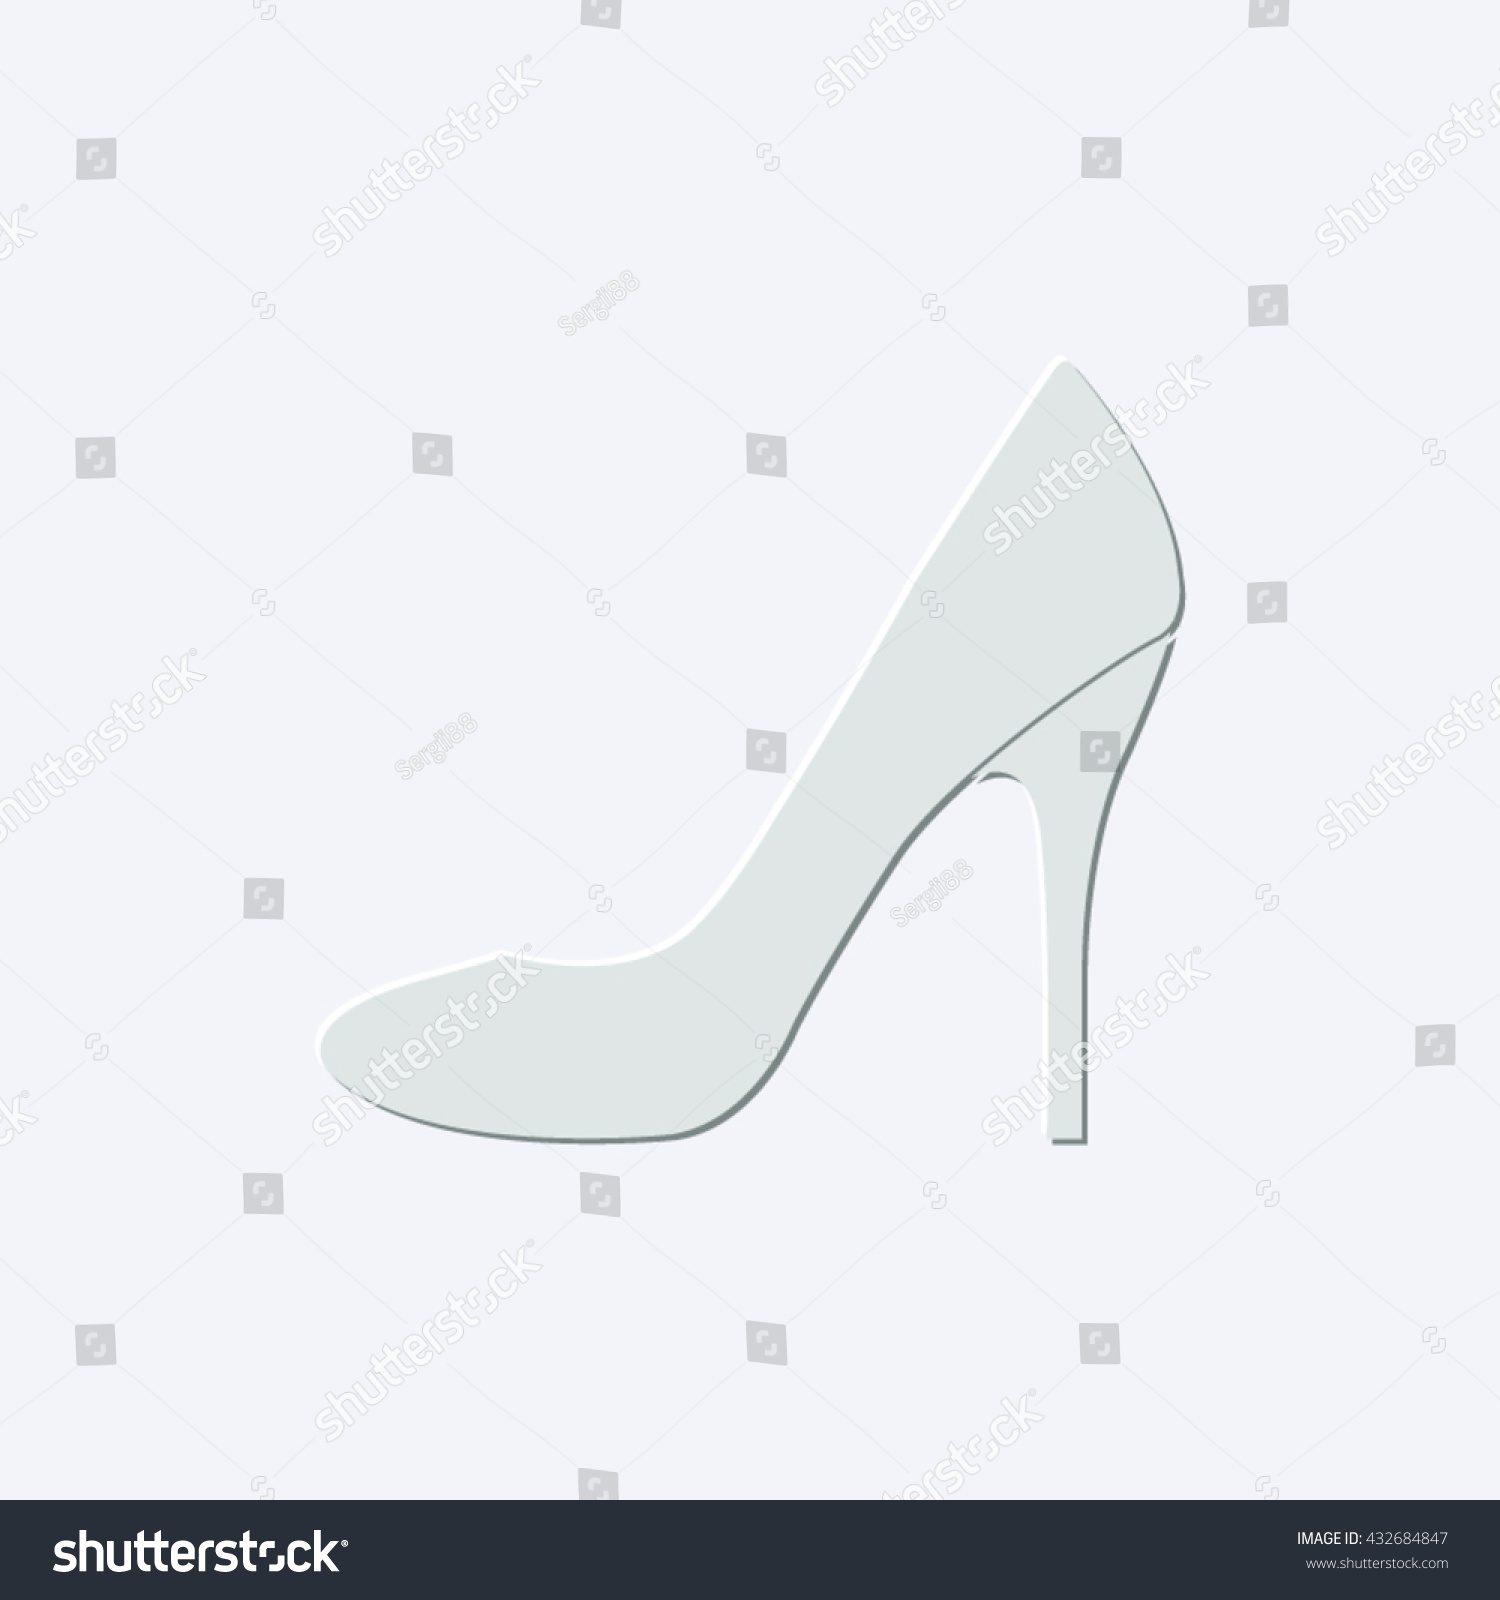 light gray high heels